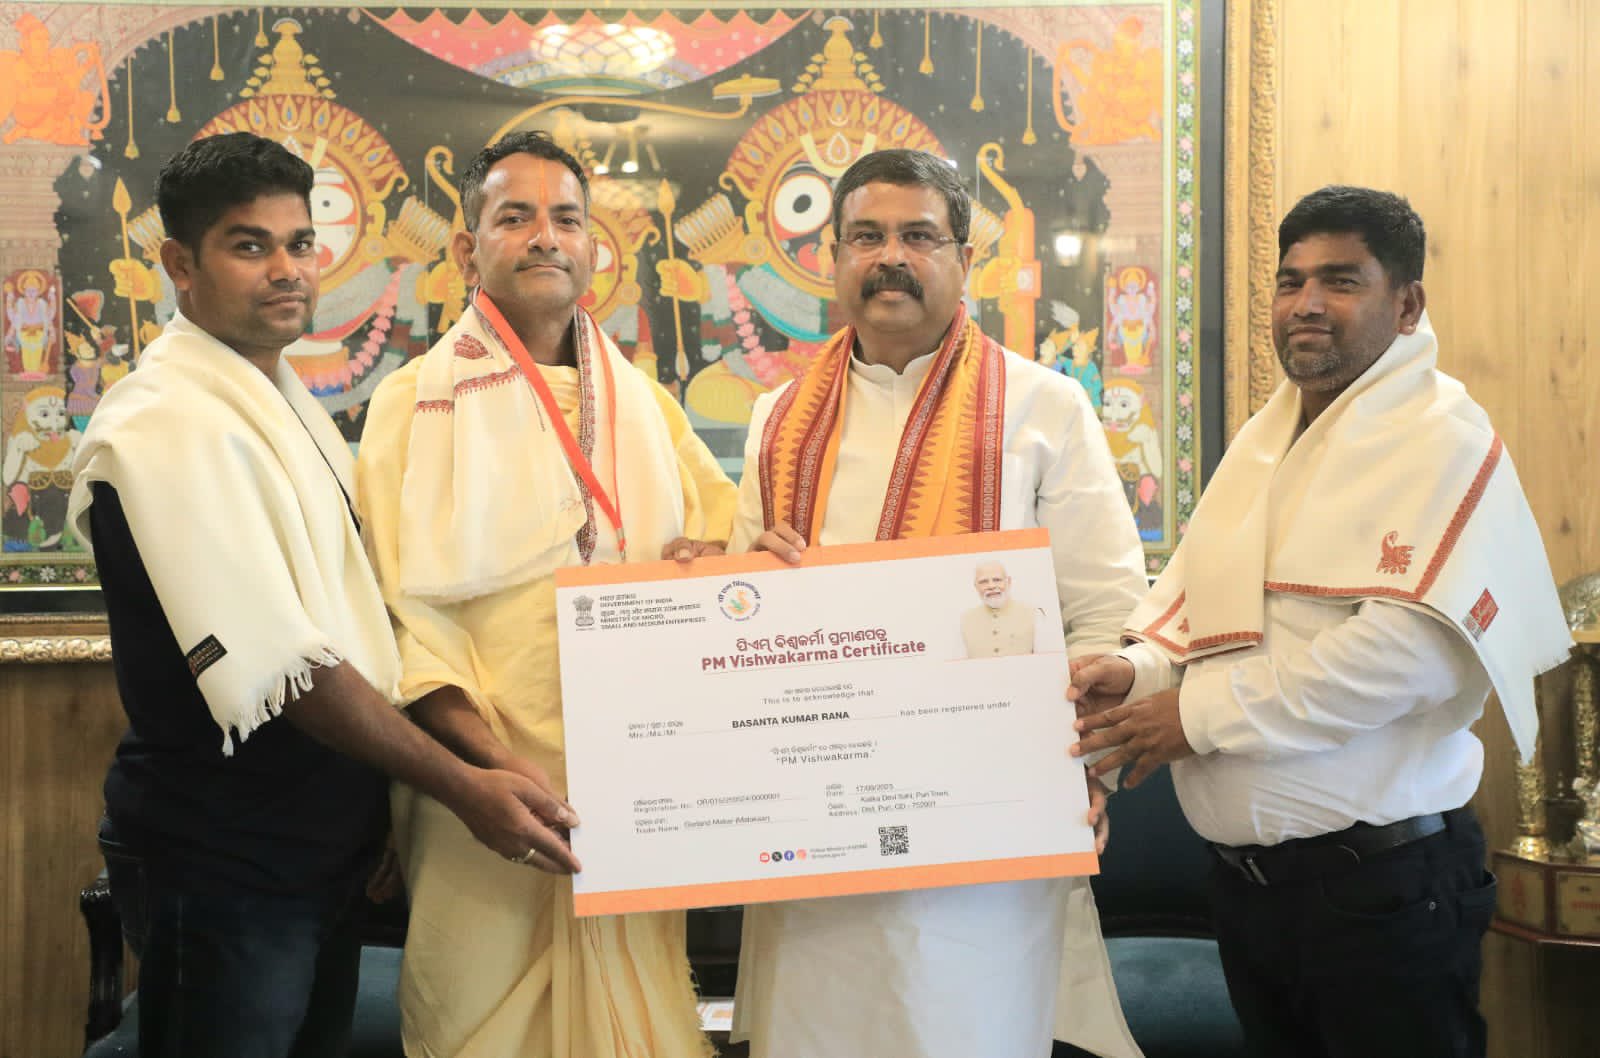 Union Education Minister Dharmendra Pradhan Praises 'PM Vishwakarma' Scheme for Empowering Artisans